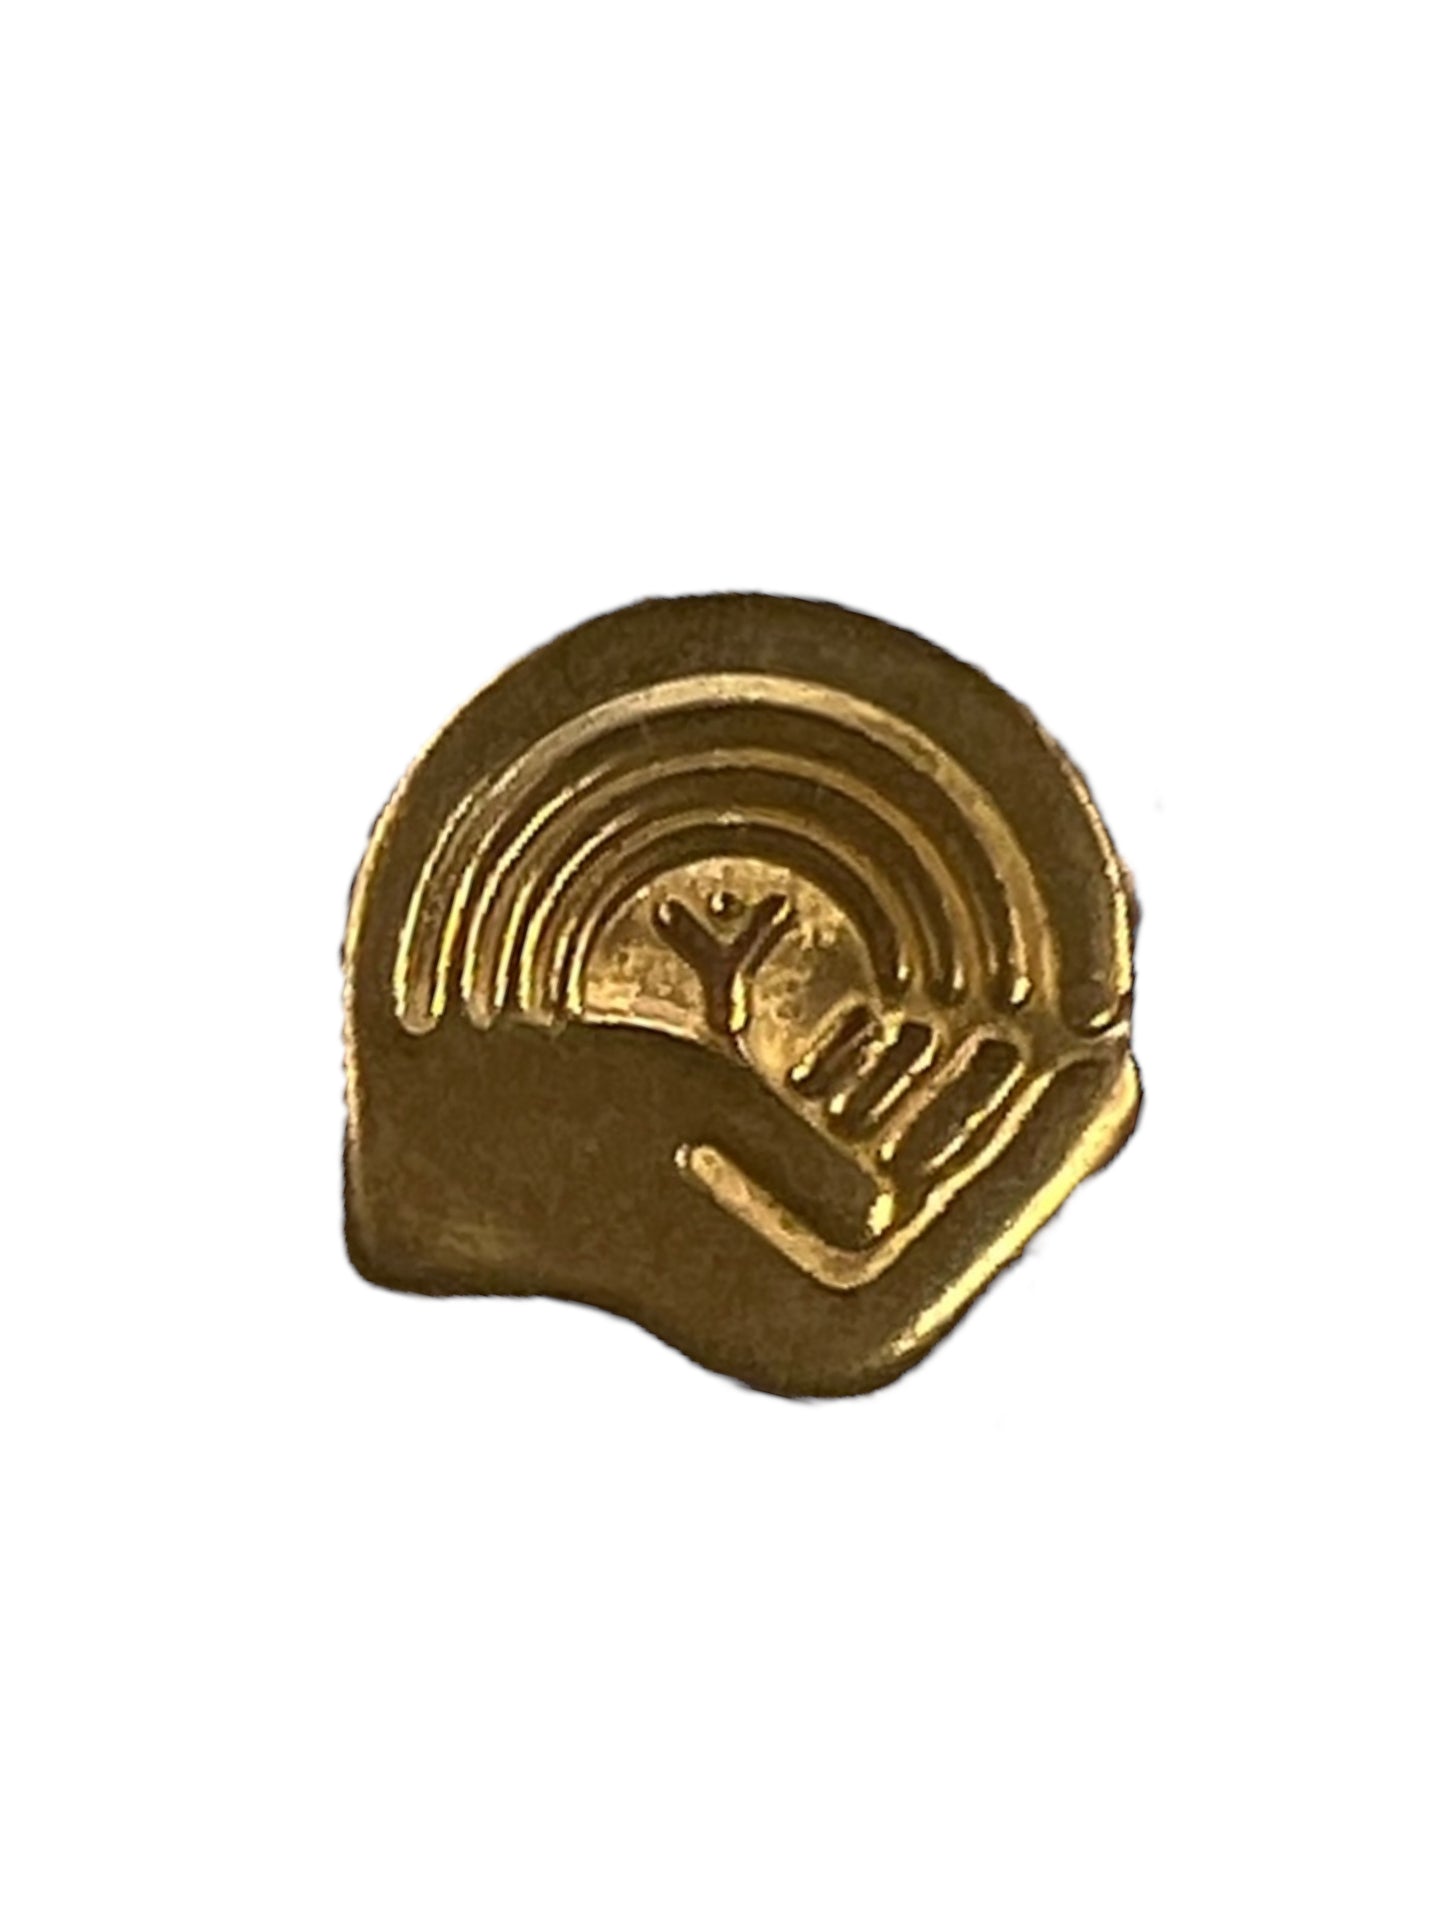 Vintage Golden Hand Pin